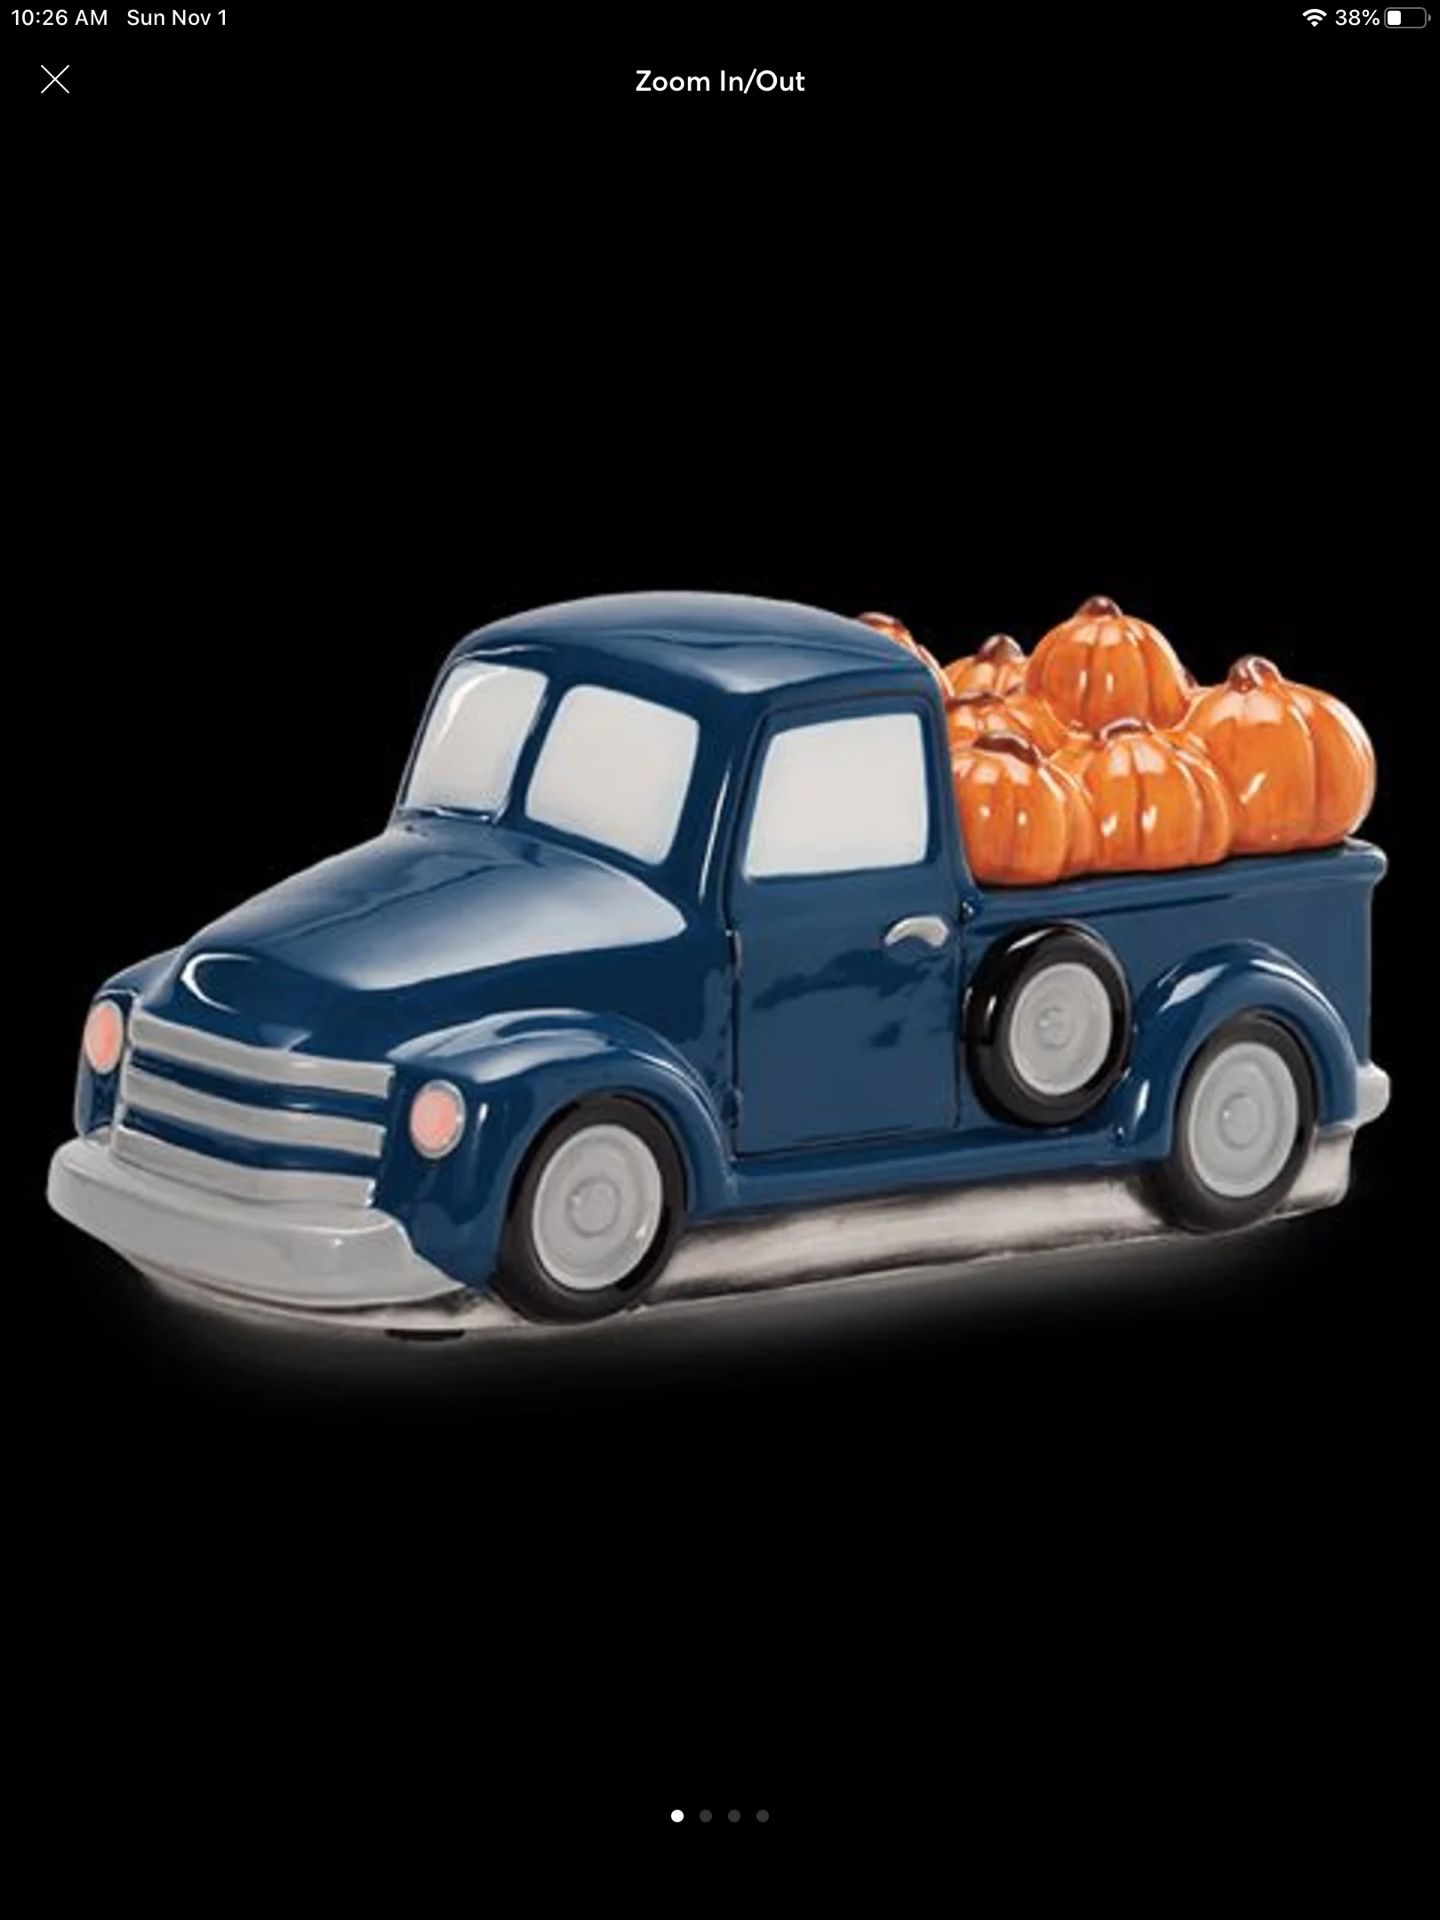 Scentsy Warmer Pumpkin Delivery Truck